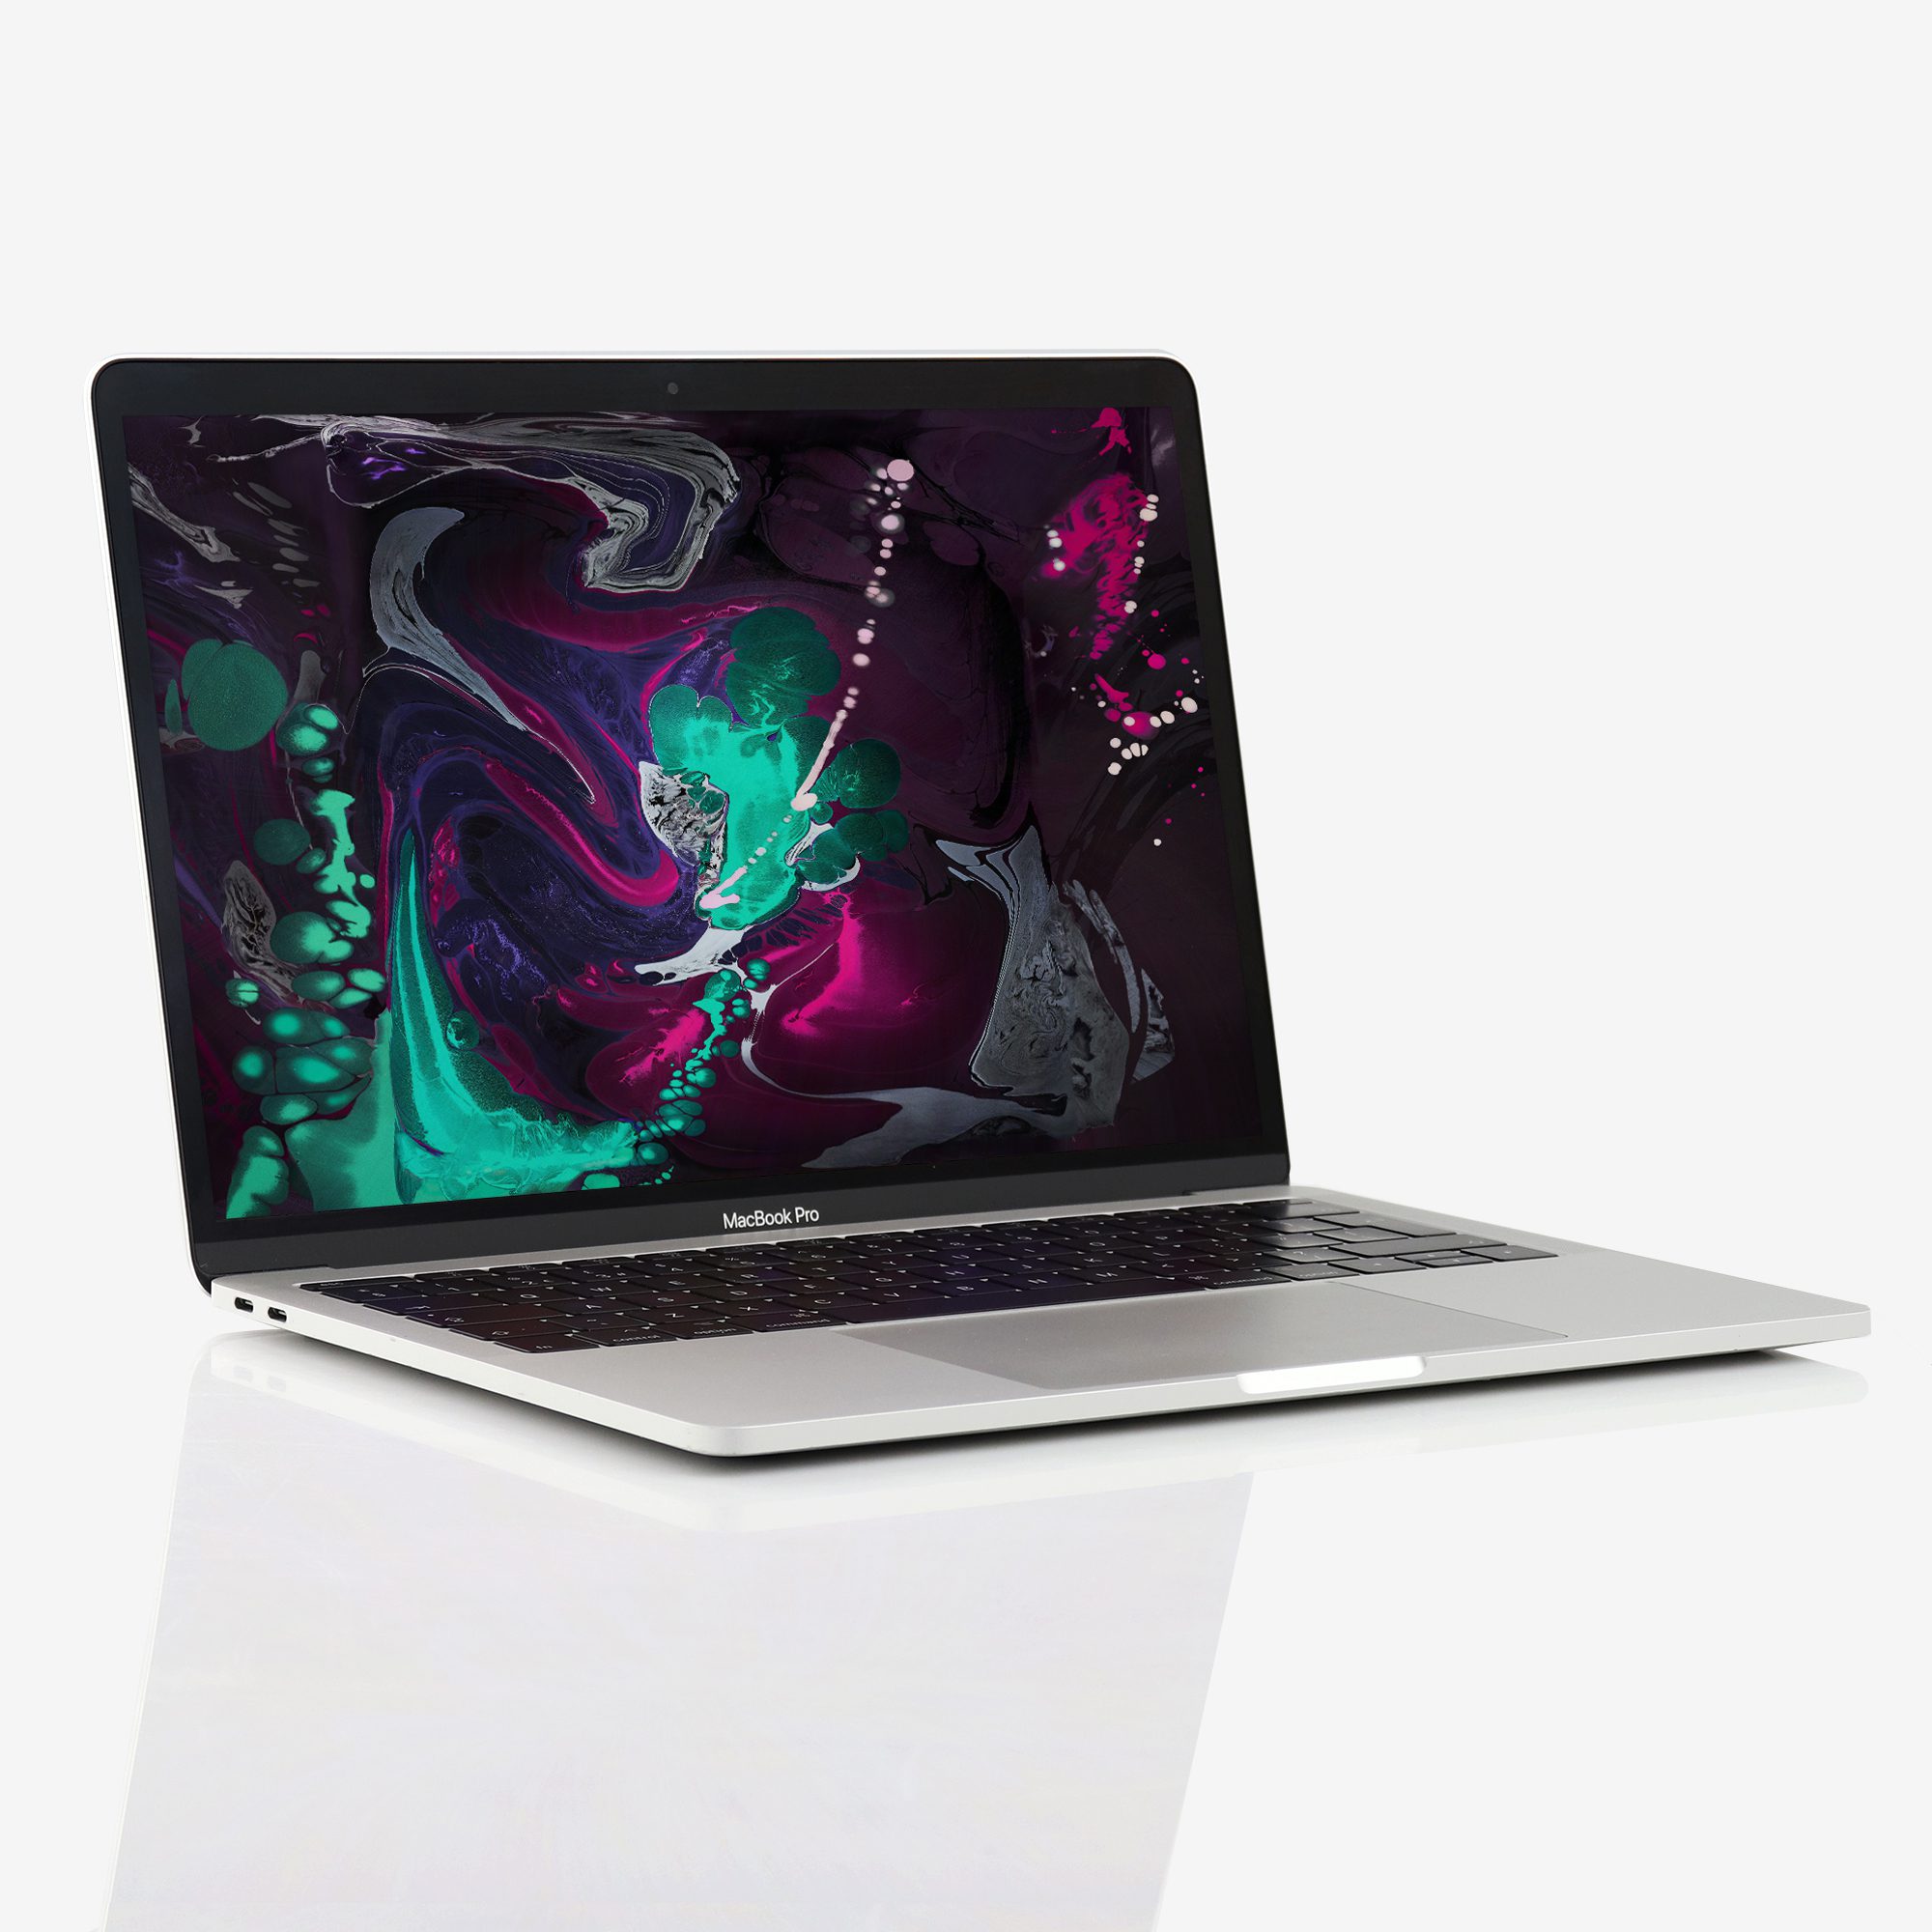 1 x Apple MacBook Pro Retina 13 Inch Touchbar Intel Core i5 2.40 GHz (2019)